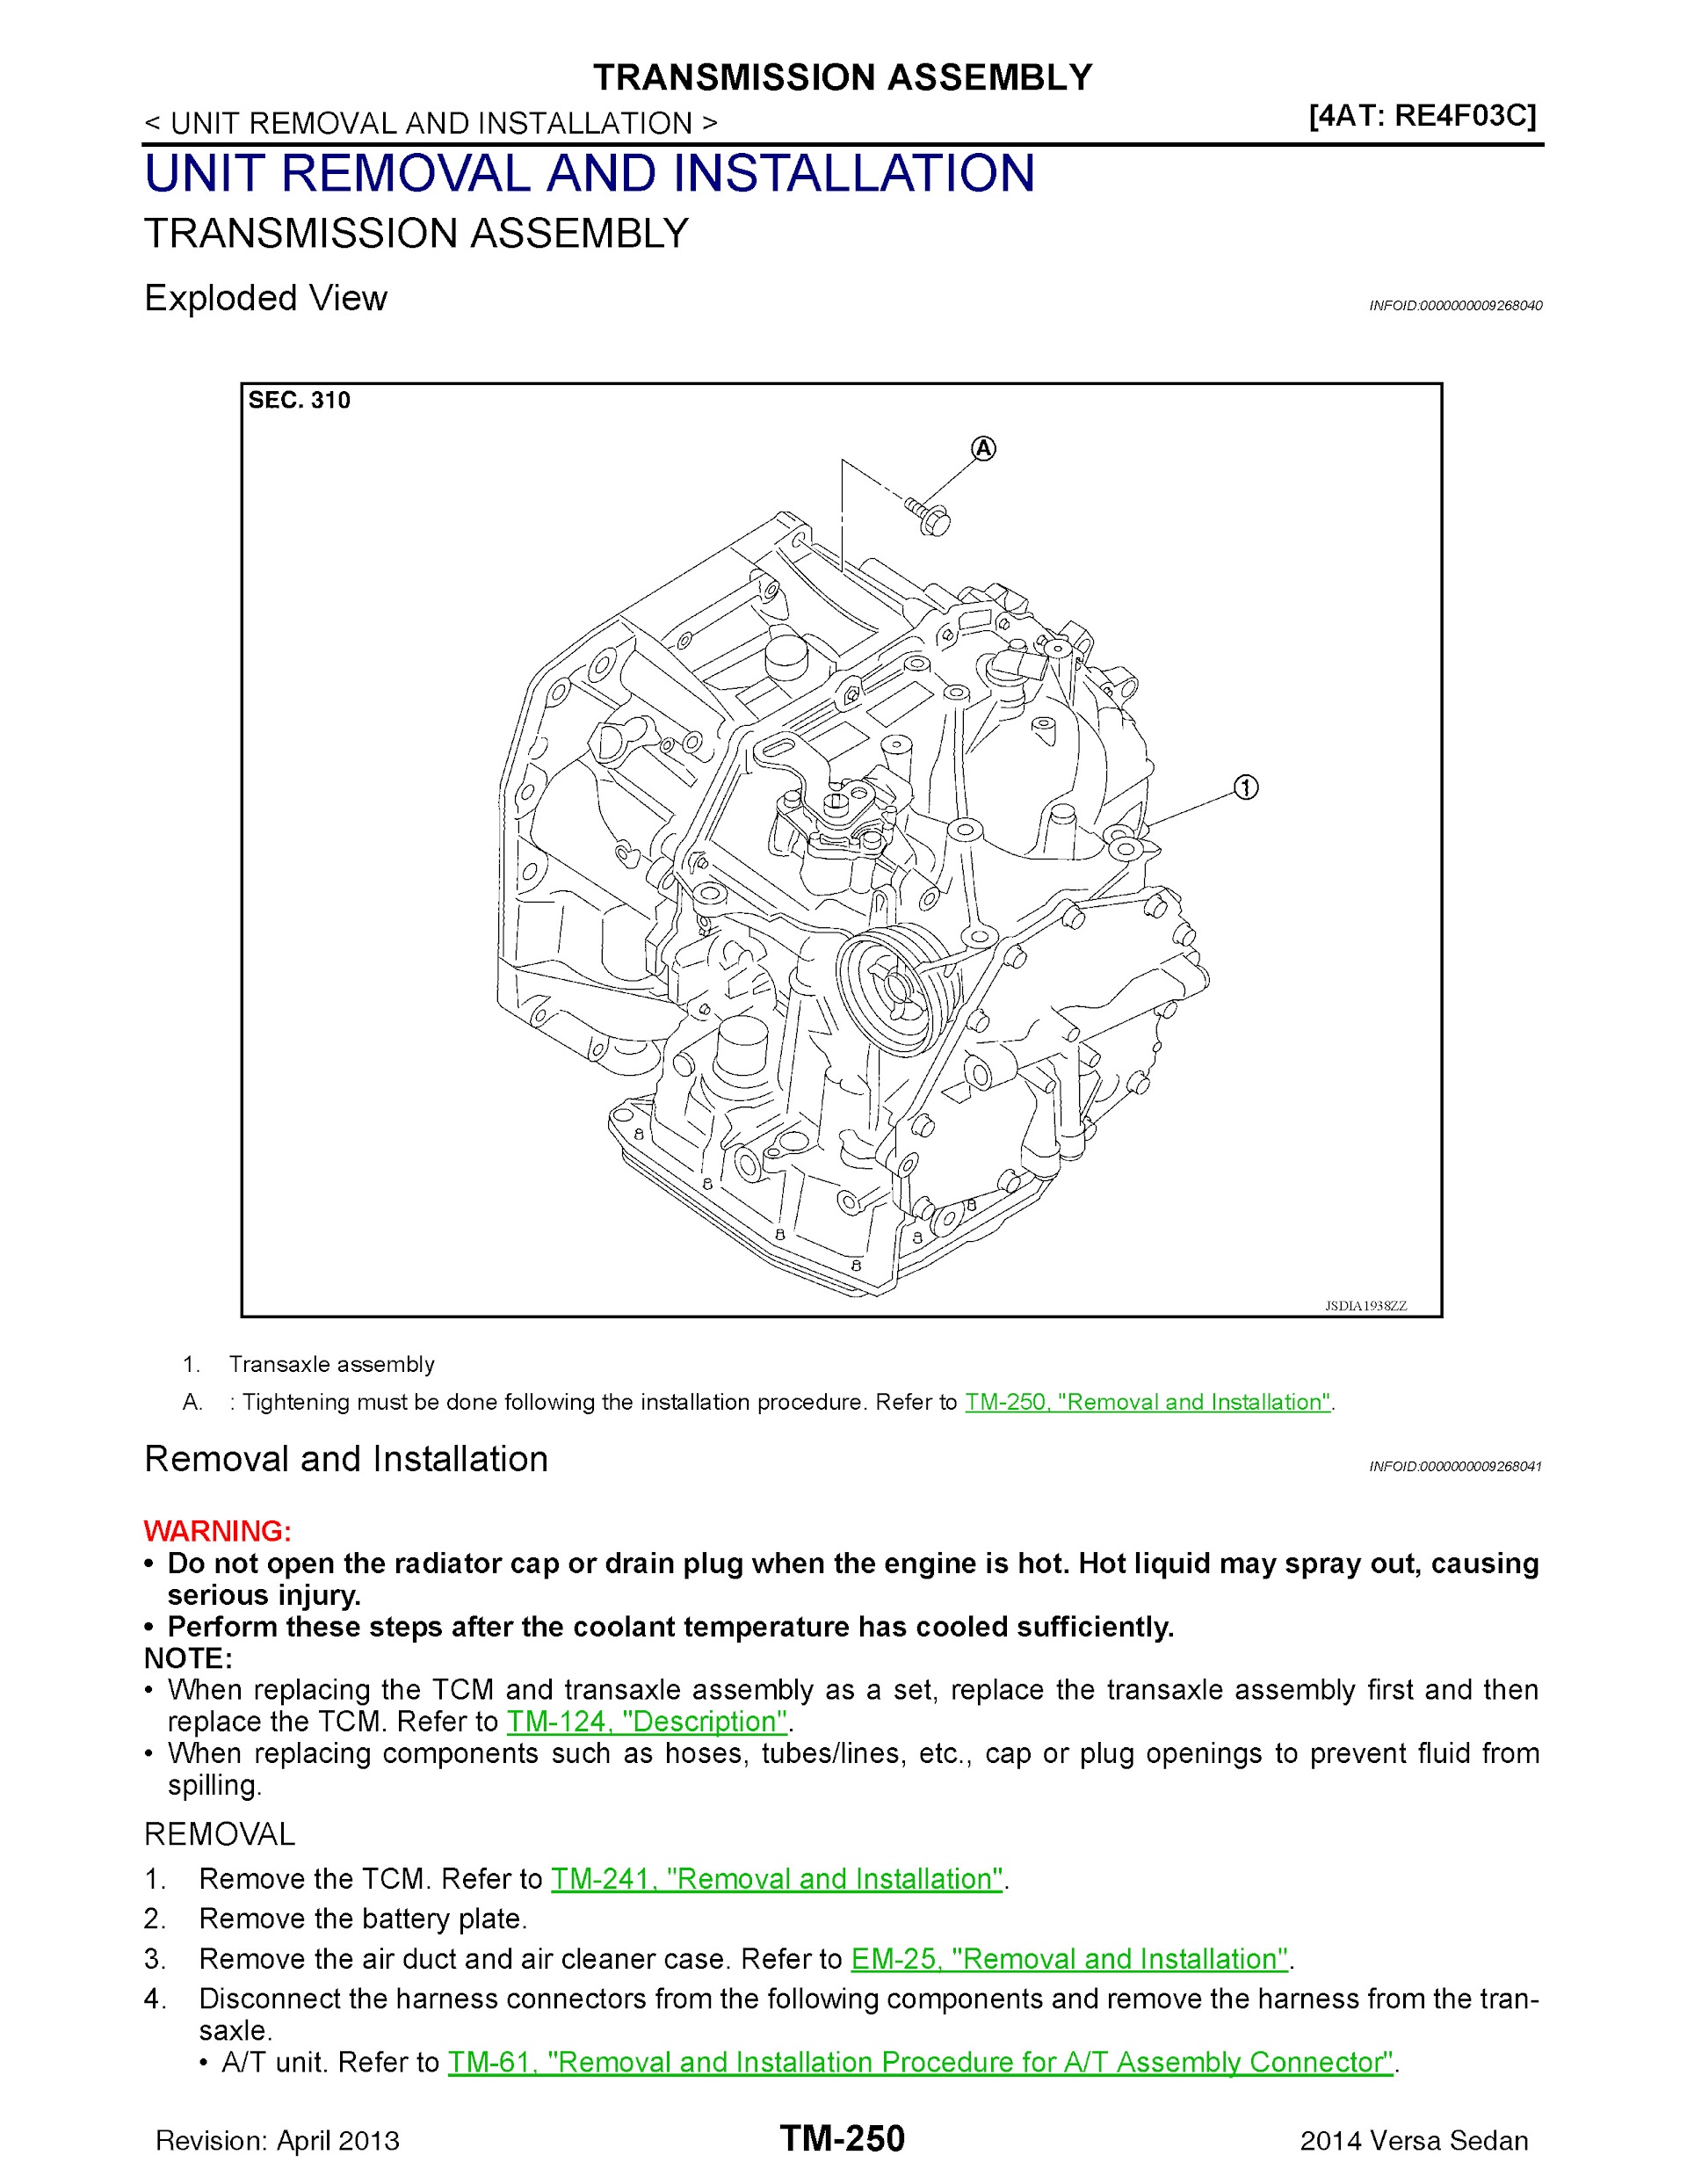 2014 Nissan Versa Sedan Repair Manual, Tranmission Assembly Unit Removal and Installation